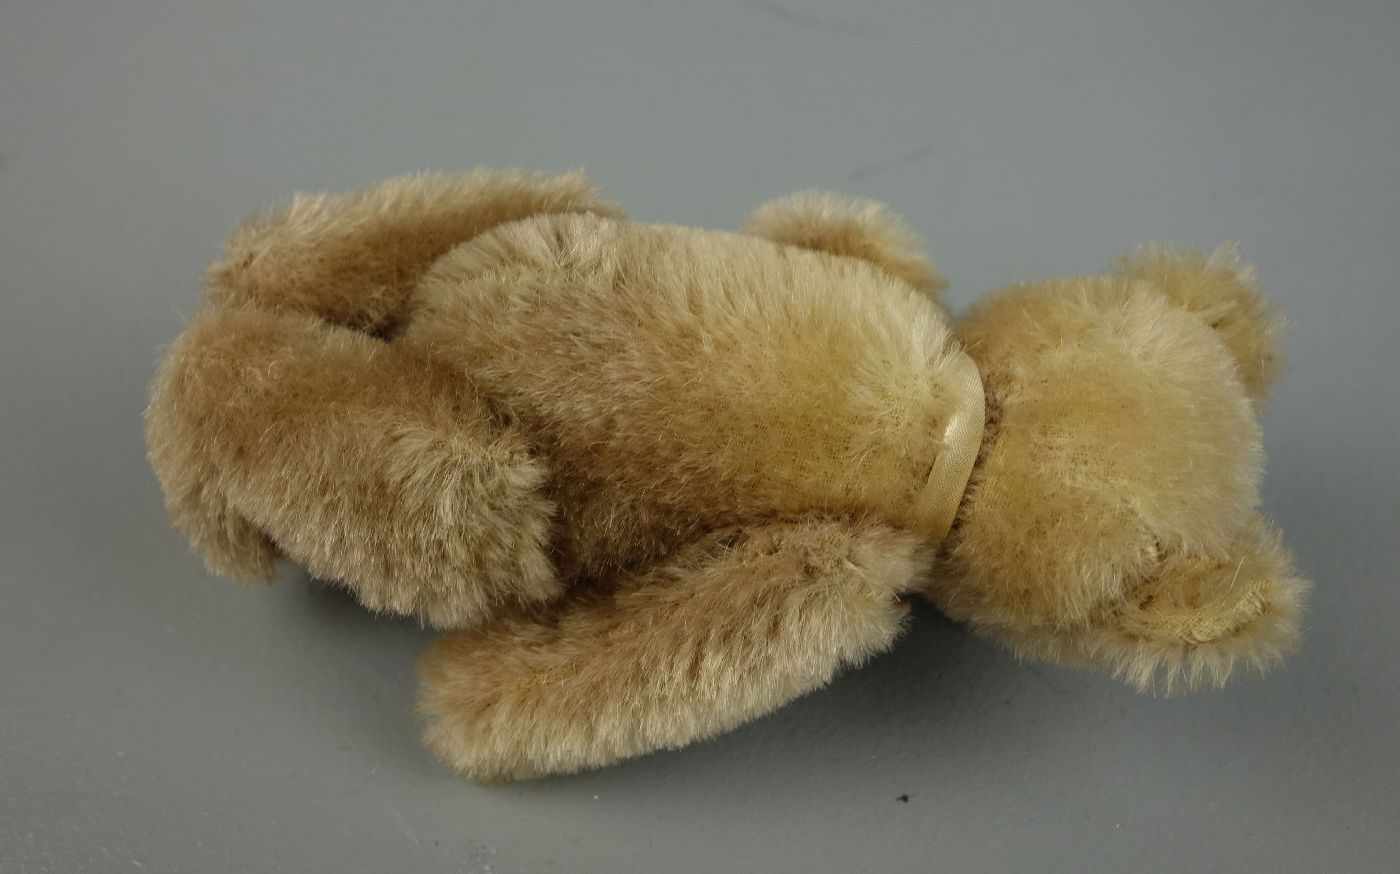 PLÜSCHTIERE / PLÜSCHFIGUREN: 3 Steiff-Teddys / Teddybären / teddy bears, 20. Jh., Manufaktur Steiff. - Image 3 of 11